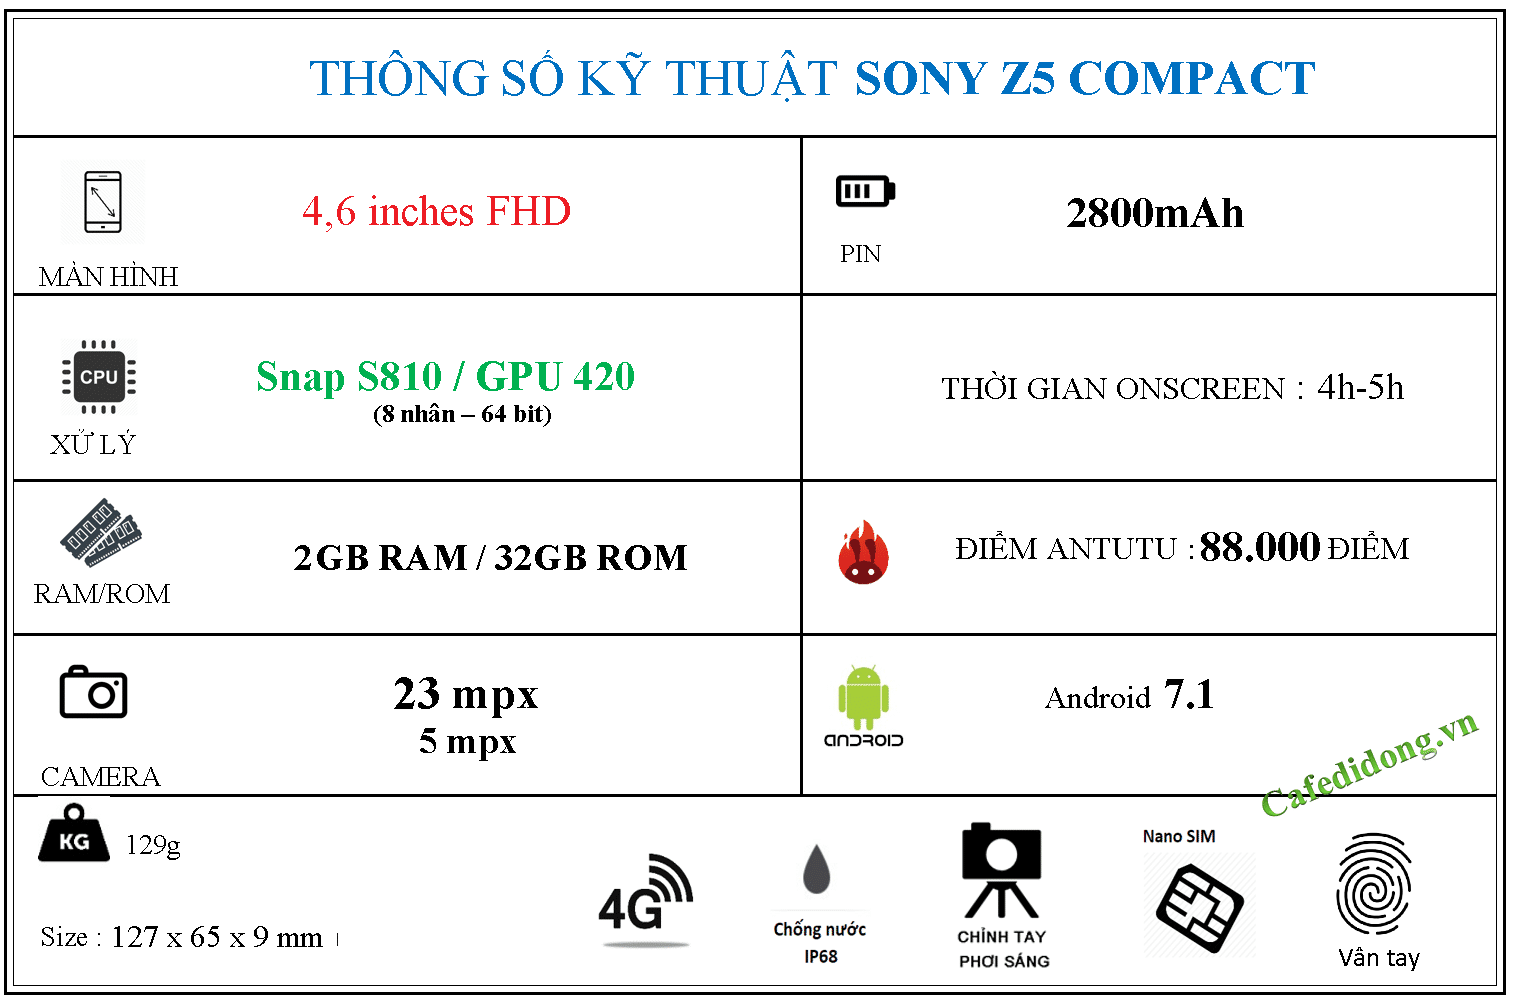 SONY Z5 COMPACT